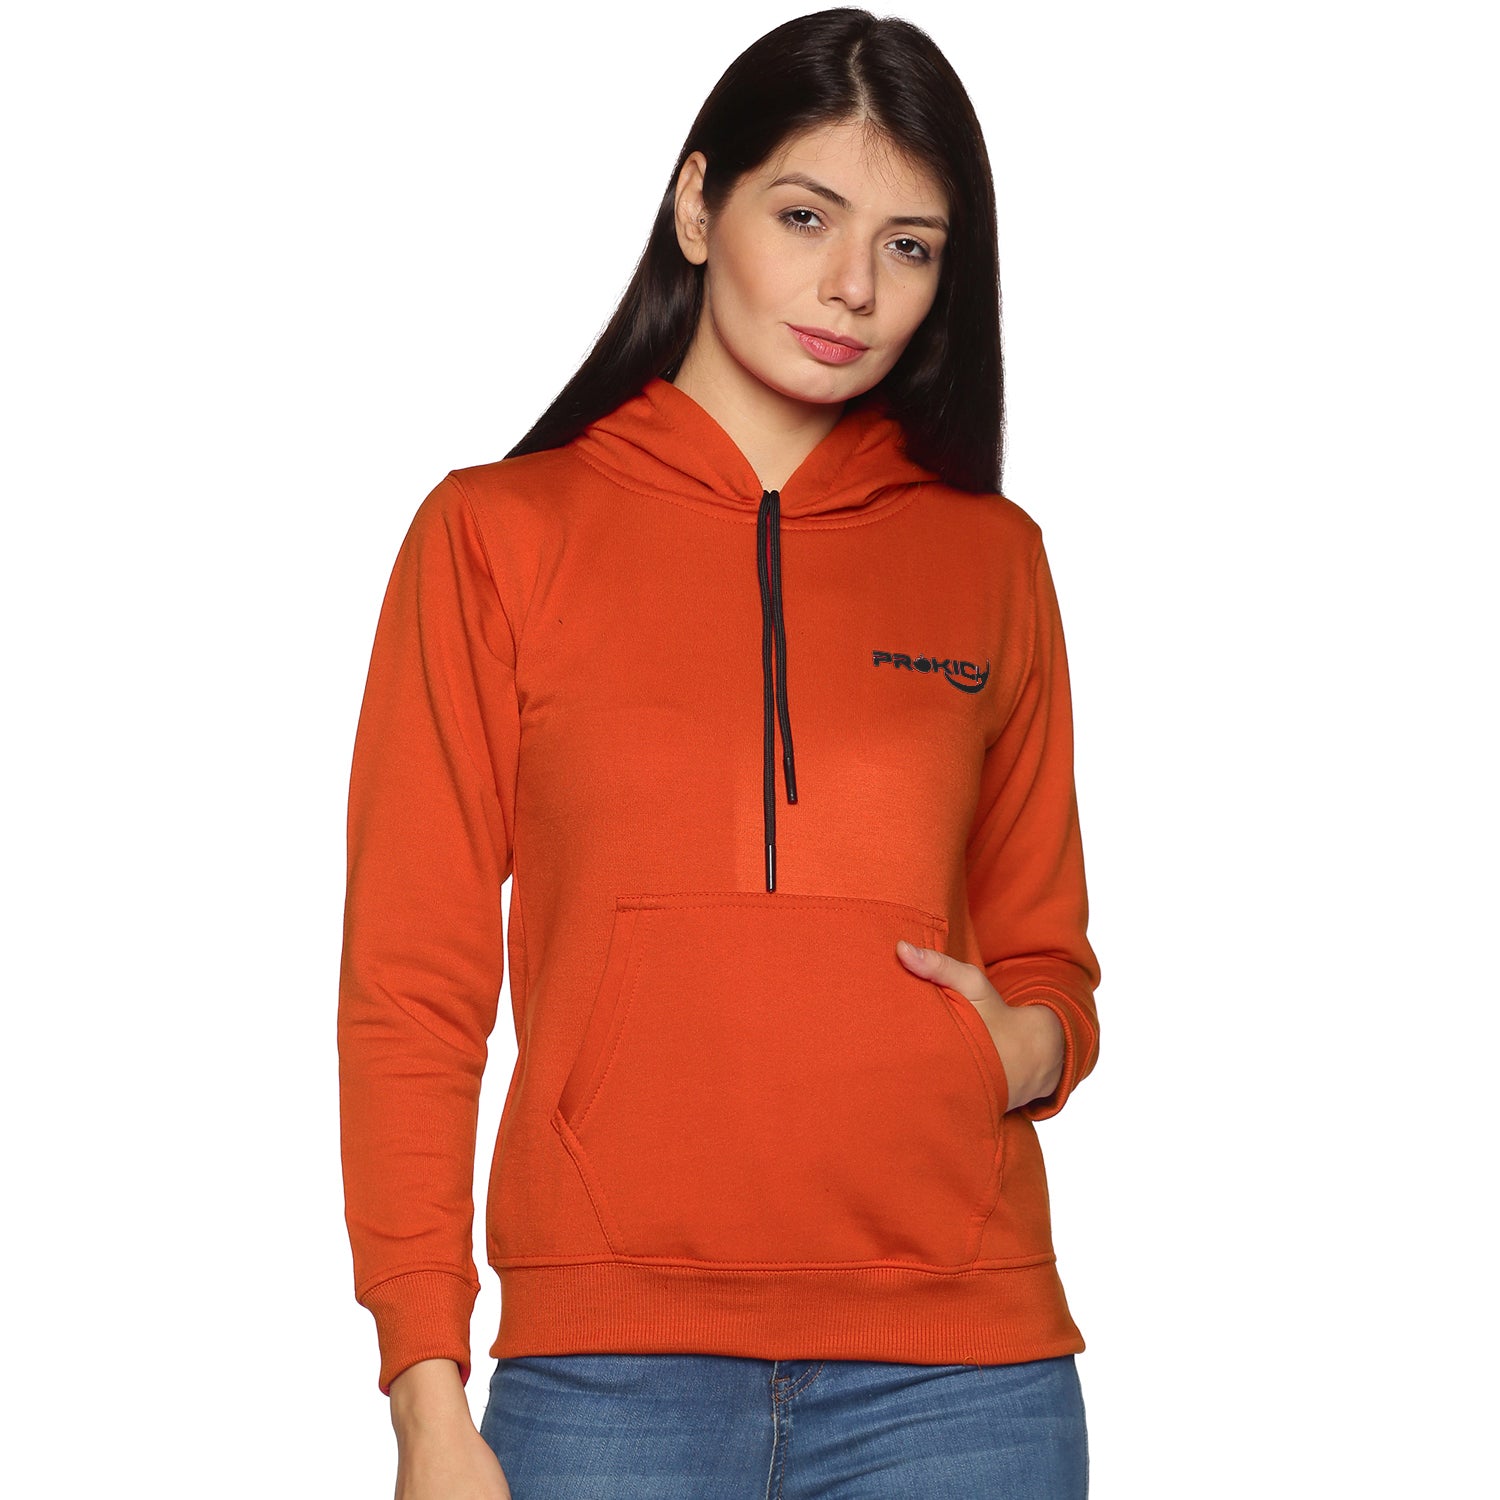 Prokick Sports Women Hooded Sweat Shirt , Orange - Best Price online Prokicksports.com